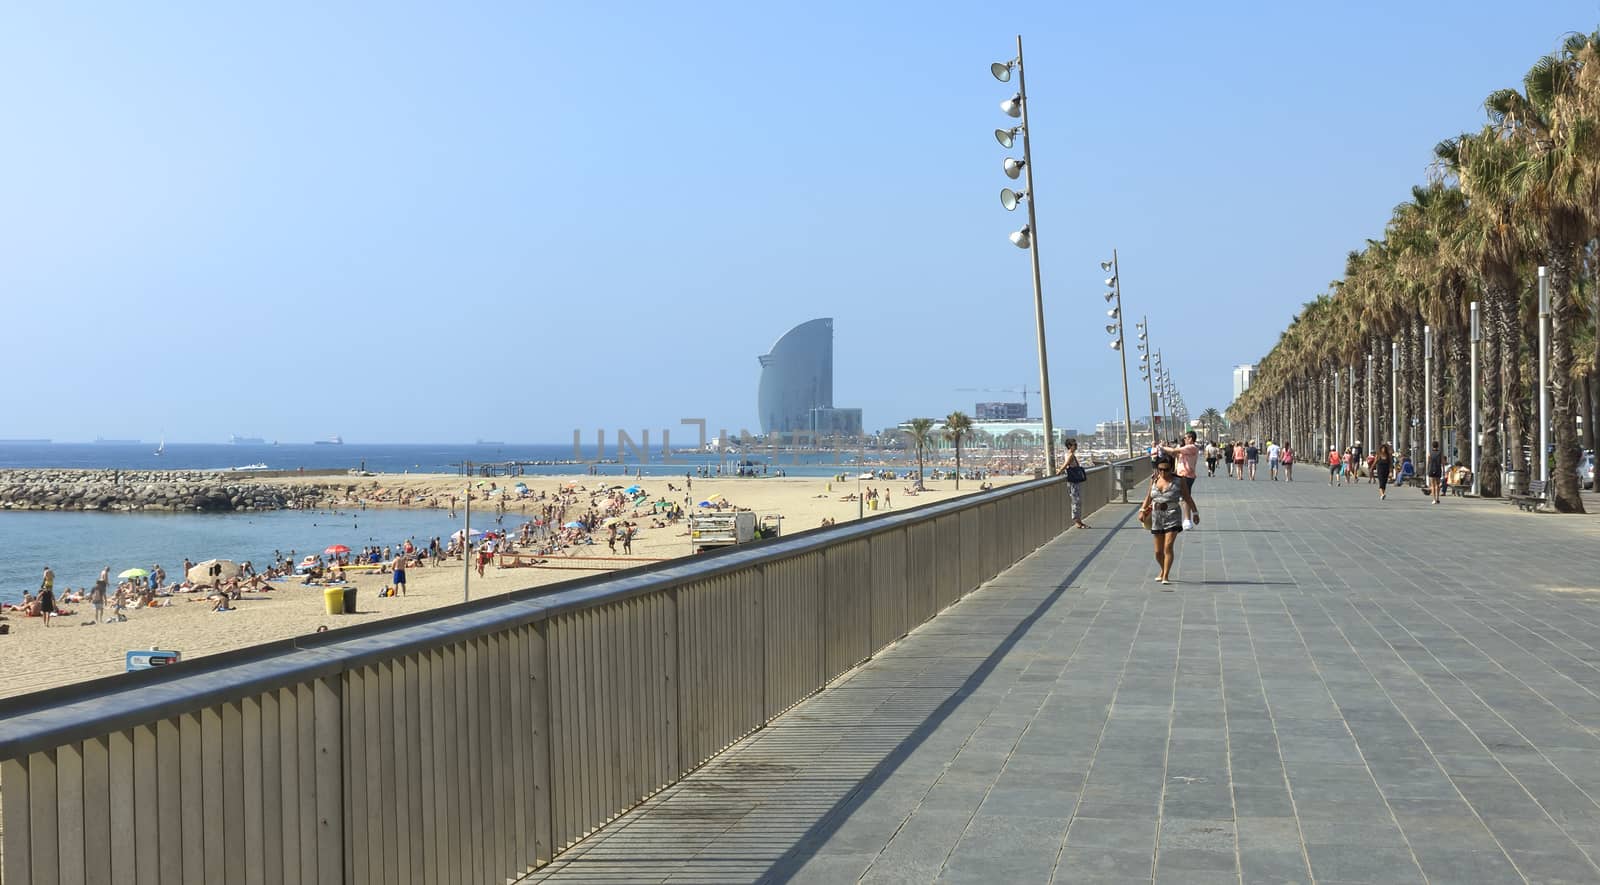 BARCELONA, SPAIN - JULY 12, 2015: View of Barceloneta Beach from Promenade. Barceloneta Beach - one of the most popular in the city.

Barcelona, Spain - July 12, 2015: View of Barceloneta Beach from Promenade. Barceloneta Beach - one of the most popular in the city. People are walking by Barceloneta Palm road.